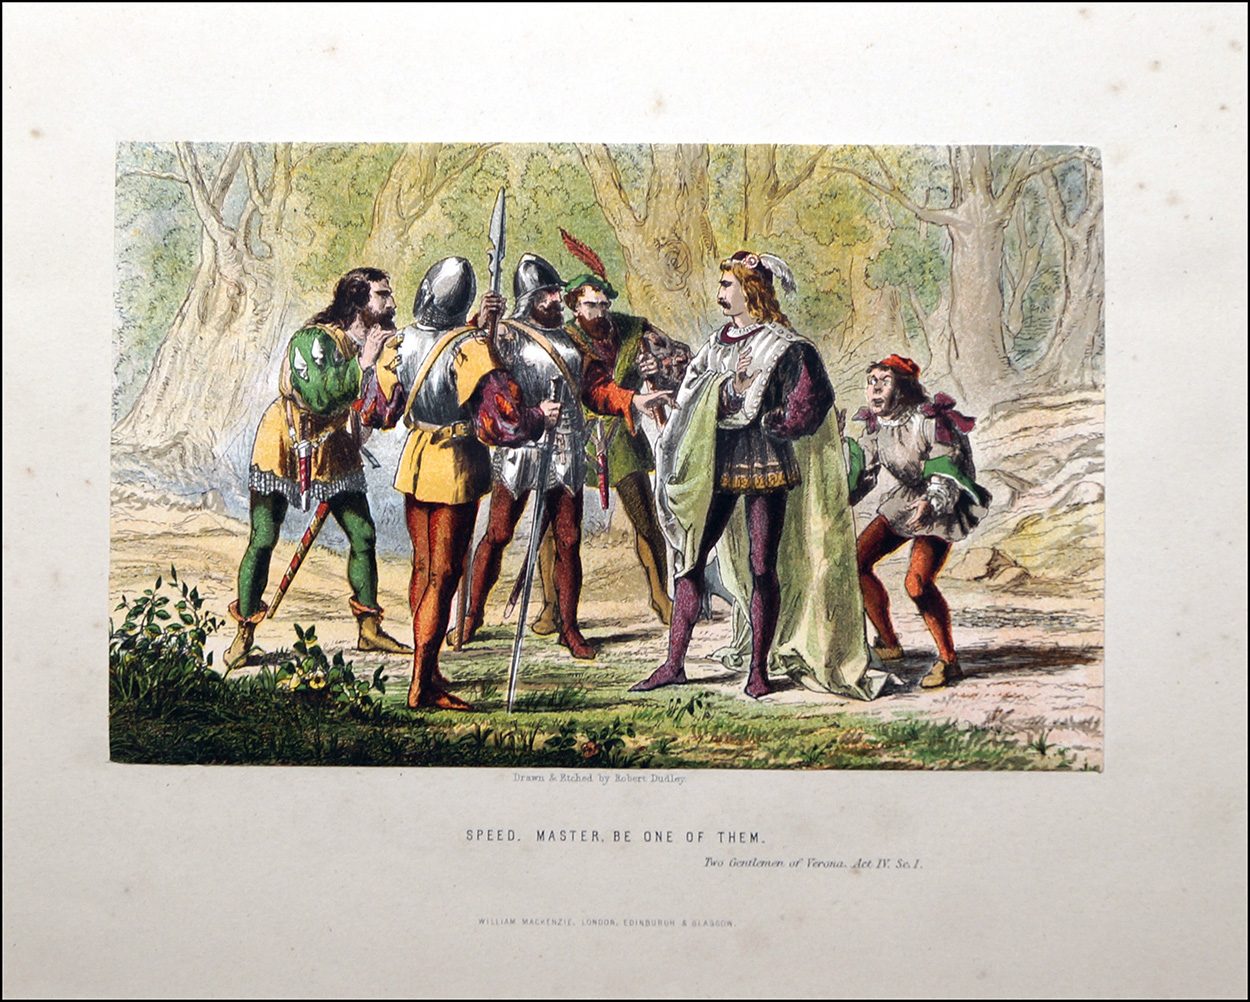 Scenes from Shakespeare - Two Gentlemen of Verona (Print) art by Robert Dudley Art at The Illustration Art Gallery